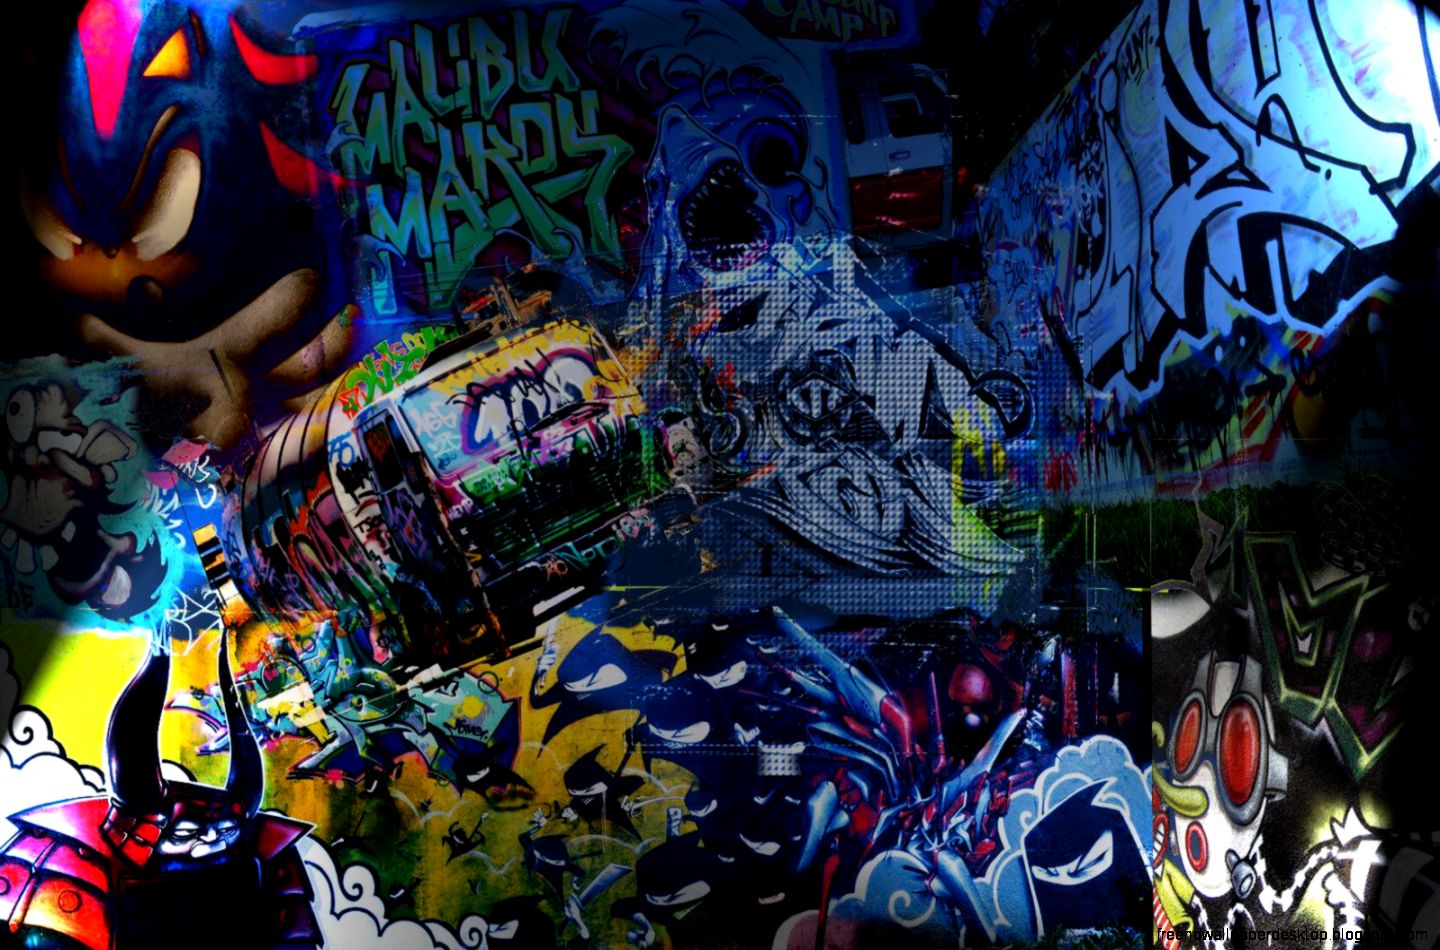 Free download OJ44 Abstract Graffiti Wallpaper Widescreen Wallpaper [1440x950] for your Desktop, Mobile & Tablet. Explore Abstract Graffiti Wallpaper. Dark Abstract Wallpaper, Abstract Art Wallpaper, Free Graffiti Wallpaper